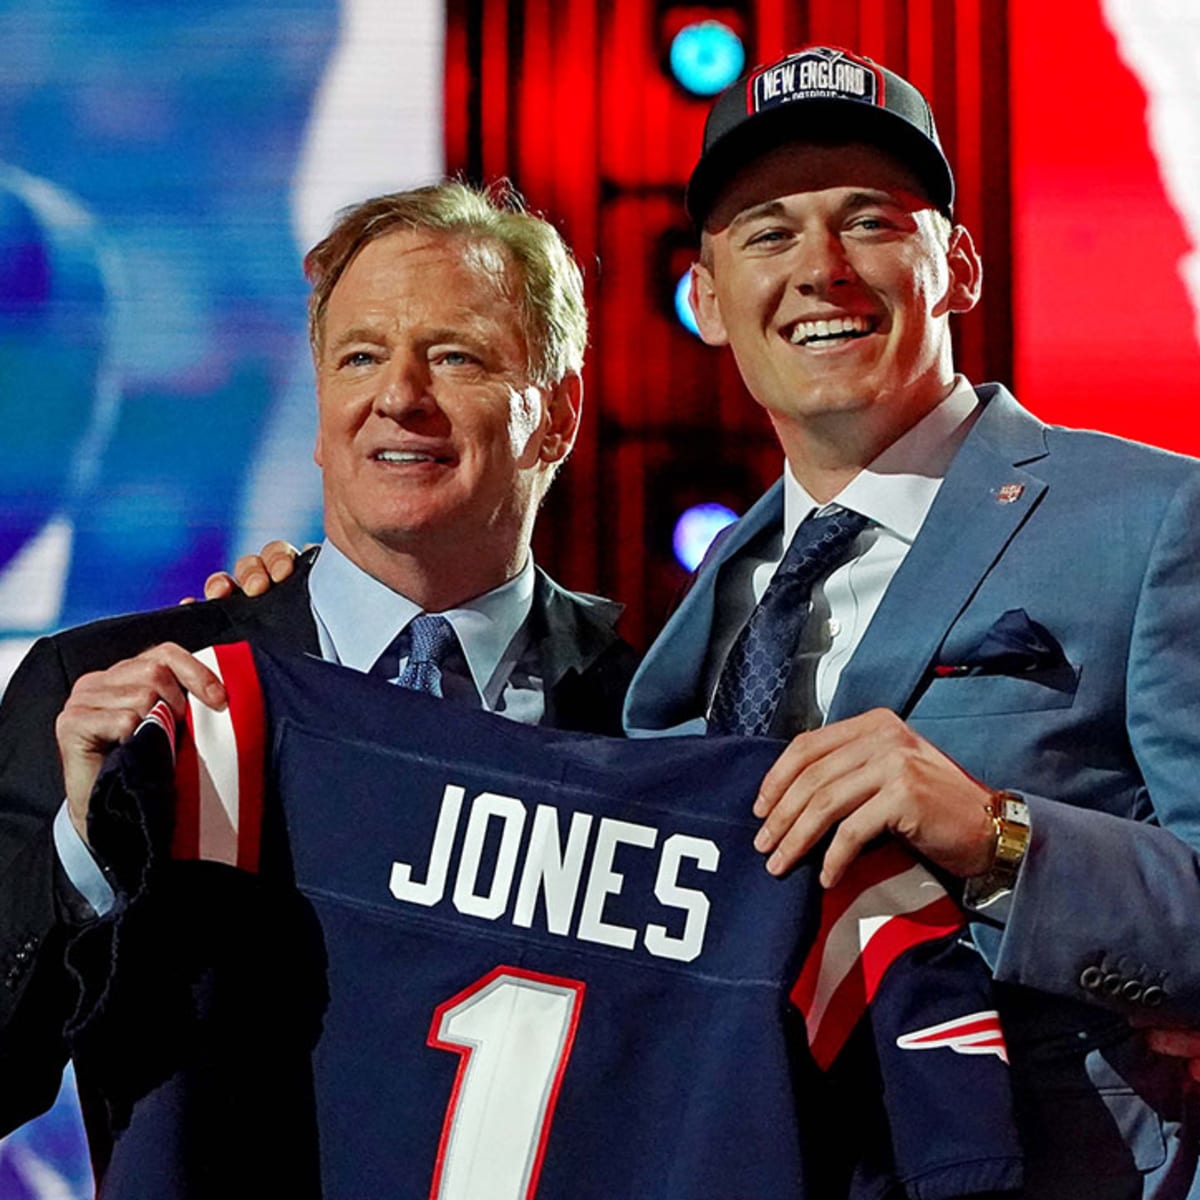 NFL Draft 2021 Day 2 live thread: Cowboys news, rumors, trades